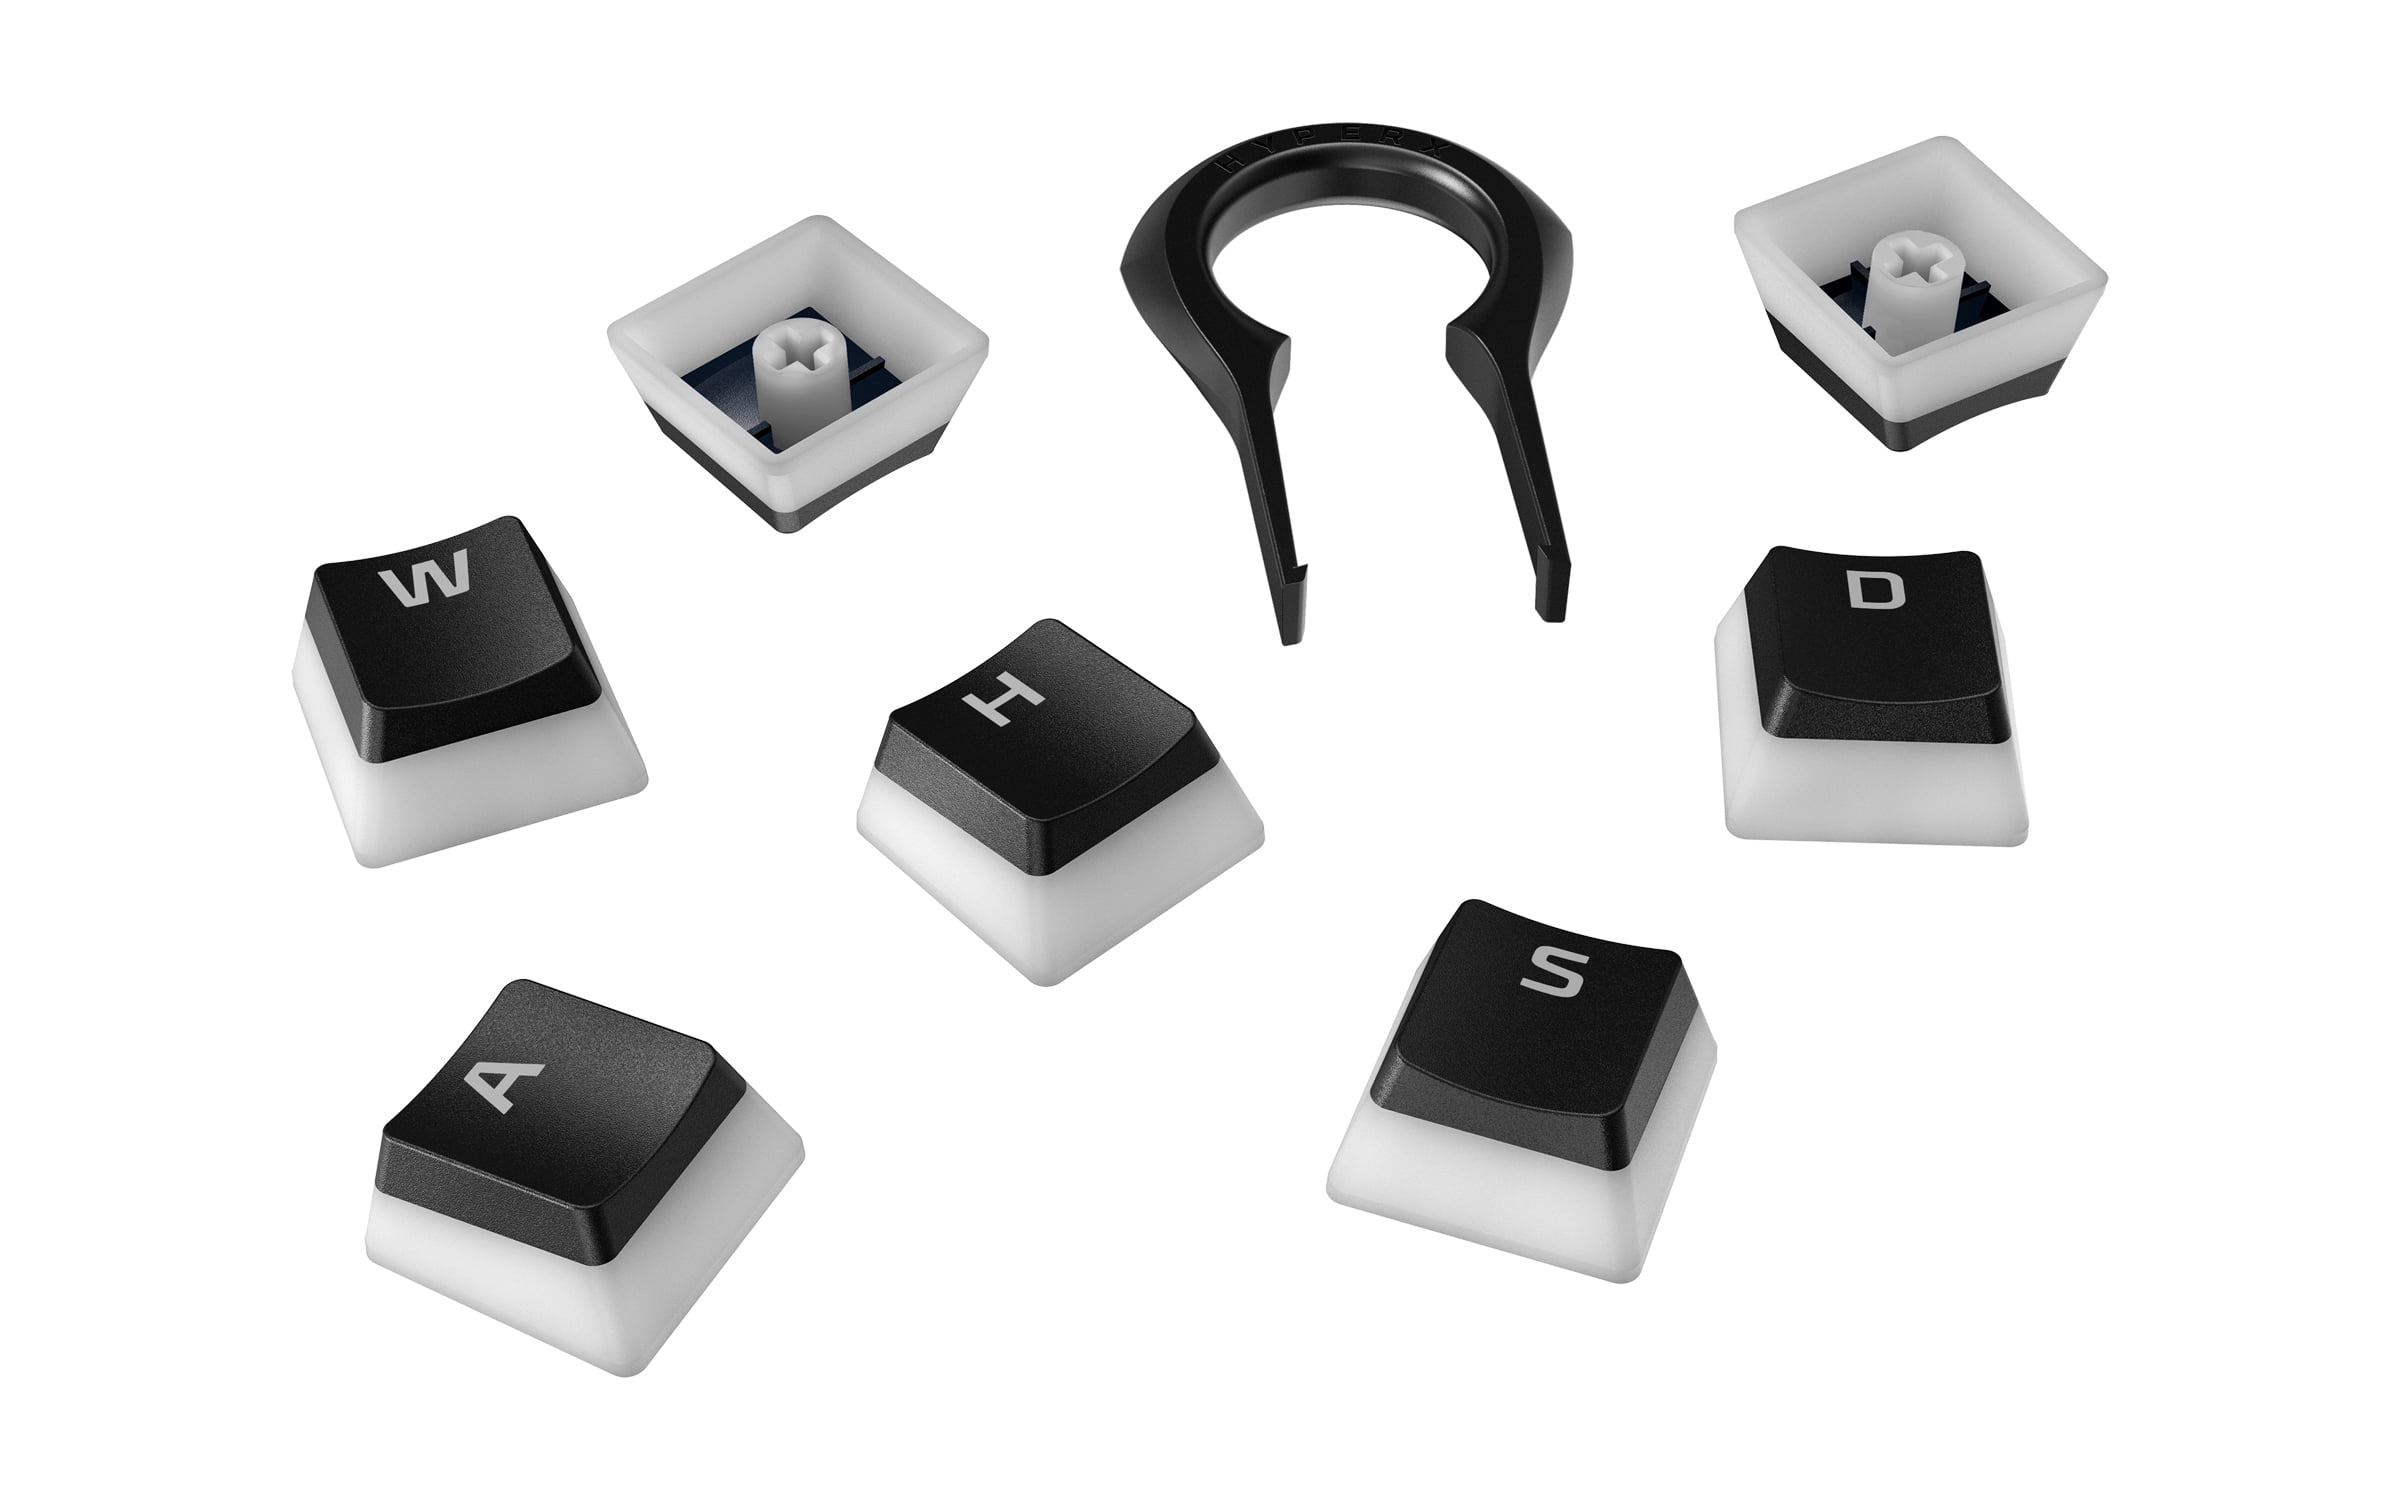 HyperX Pudding Keycaps - Key - PBT - English (US) Layout - 104 Key, Backlit, OEM Profile, 2 Year Warranty - Black - Walmart.com